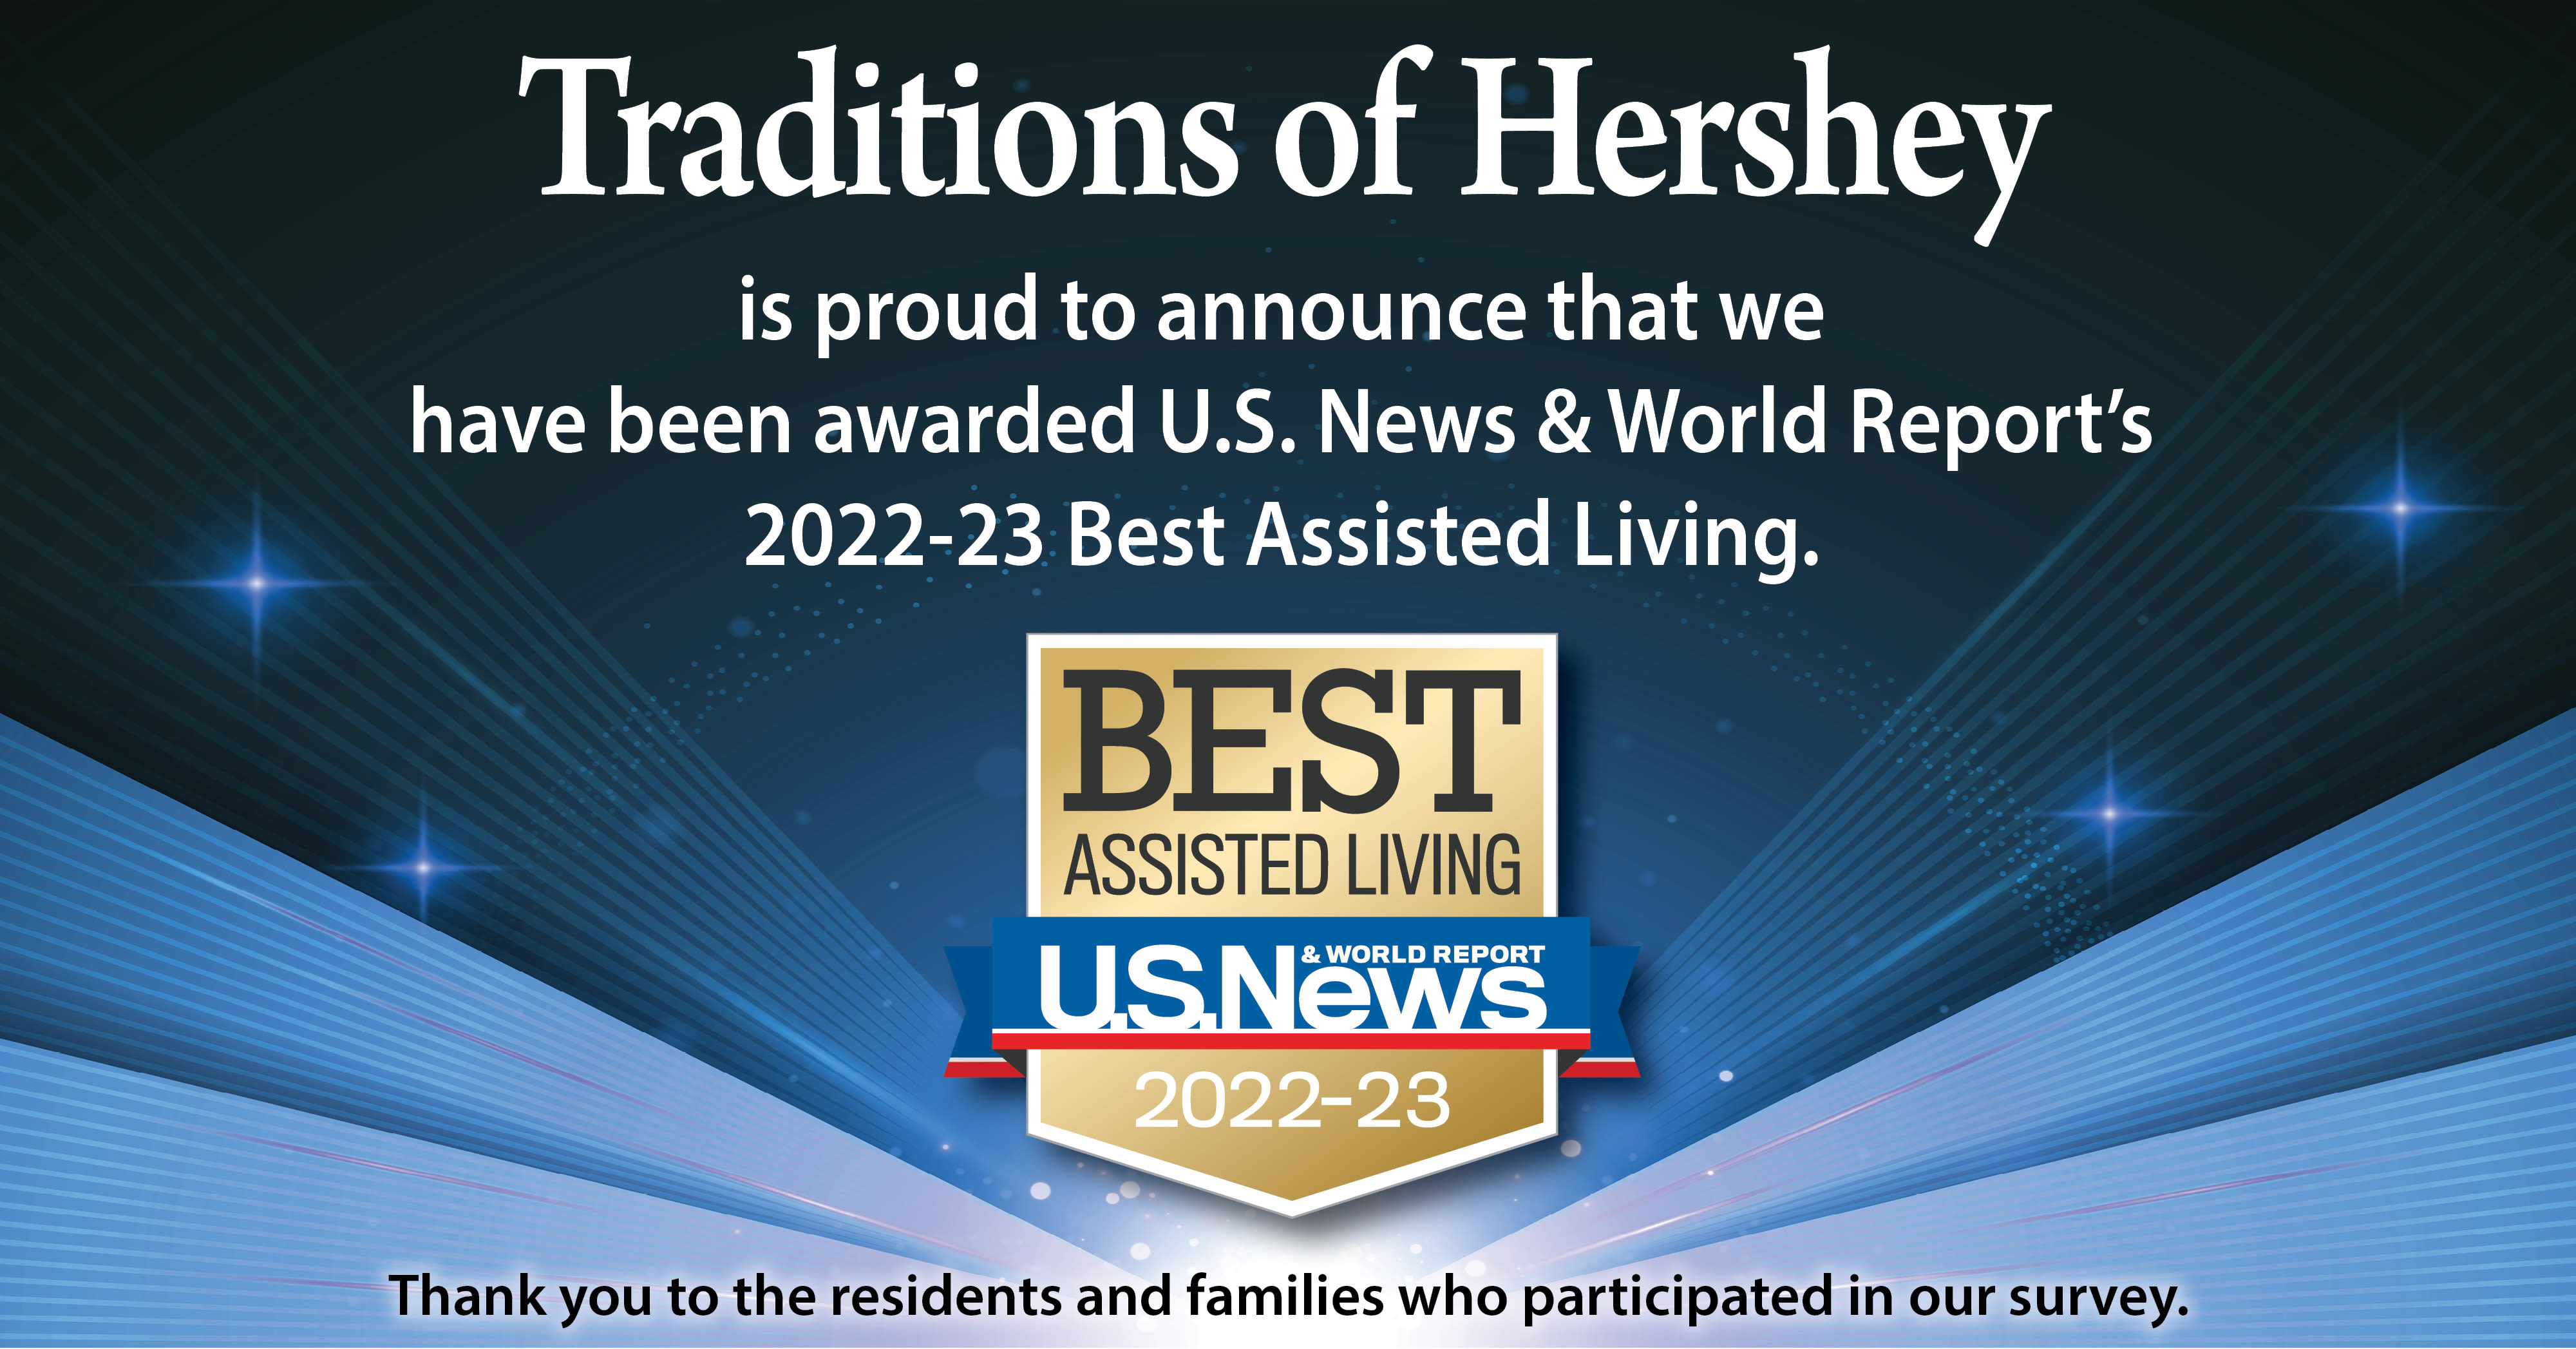 US News Best Senior Living Award 2022 for Traditions of Hershey